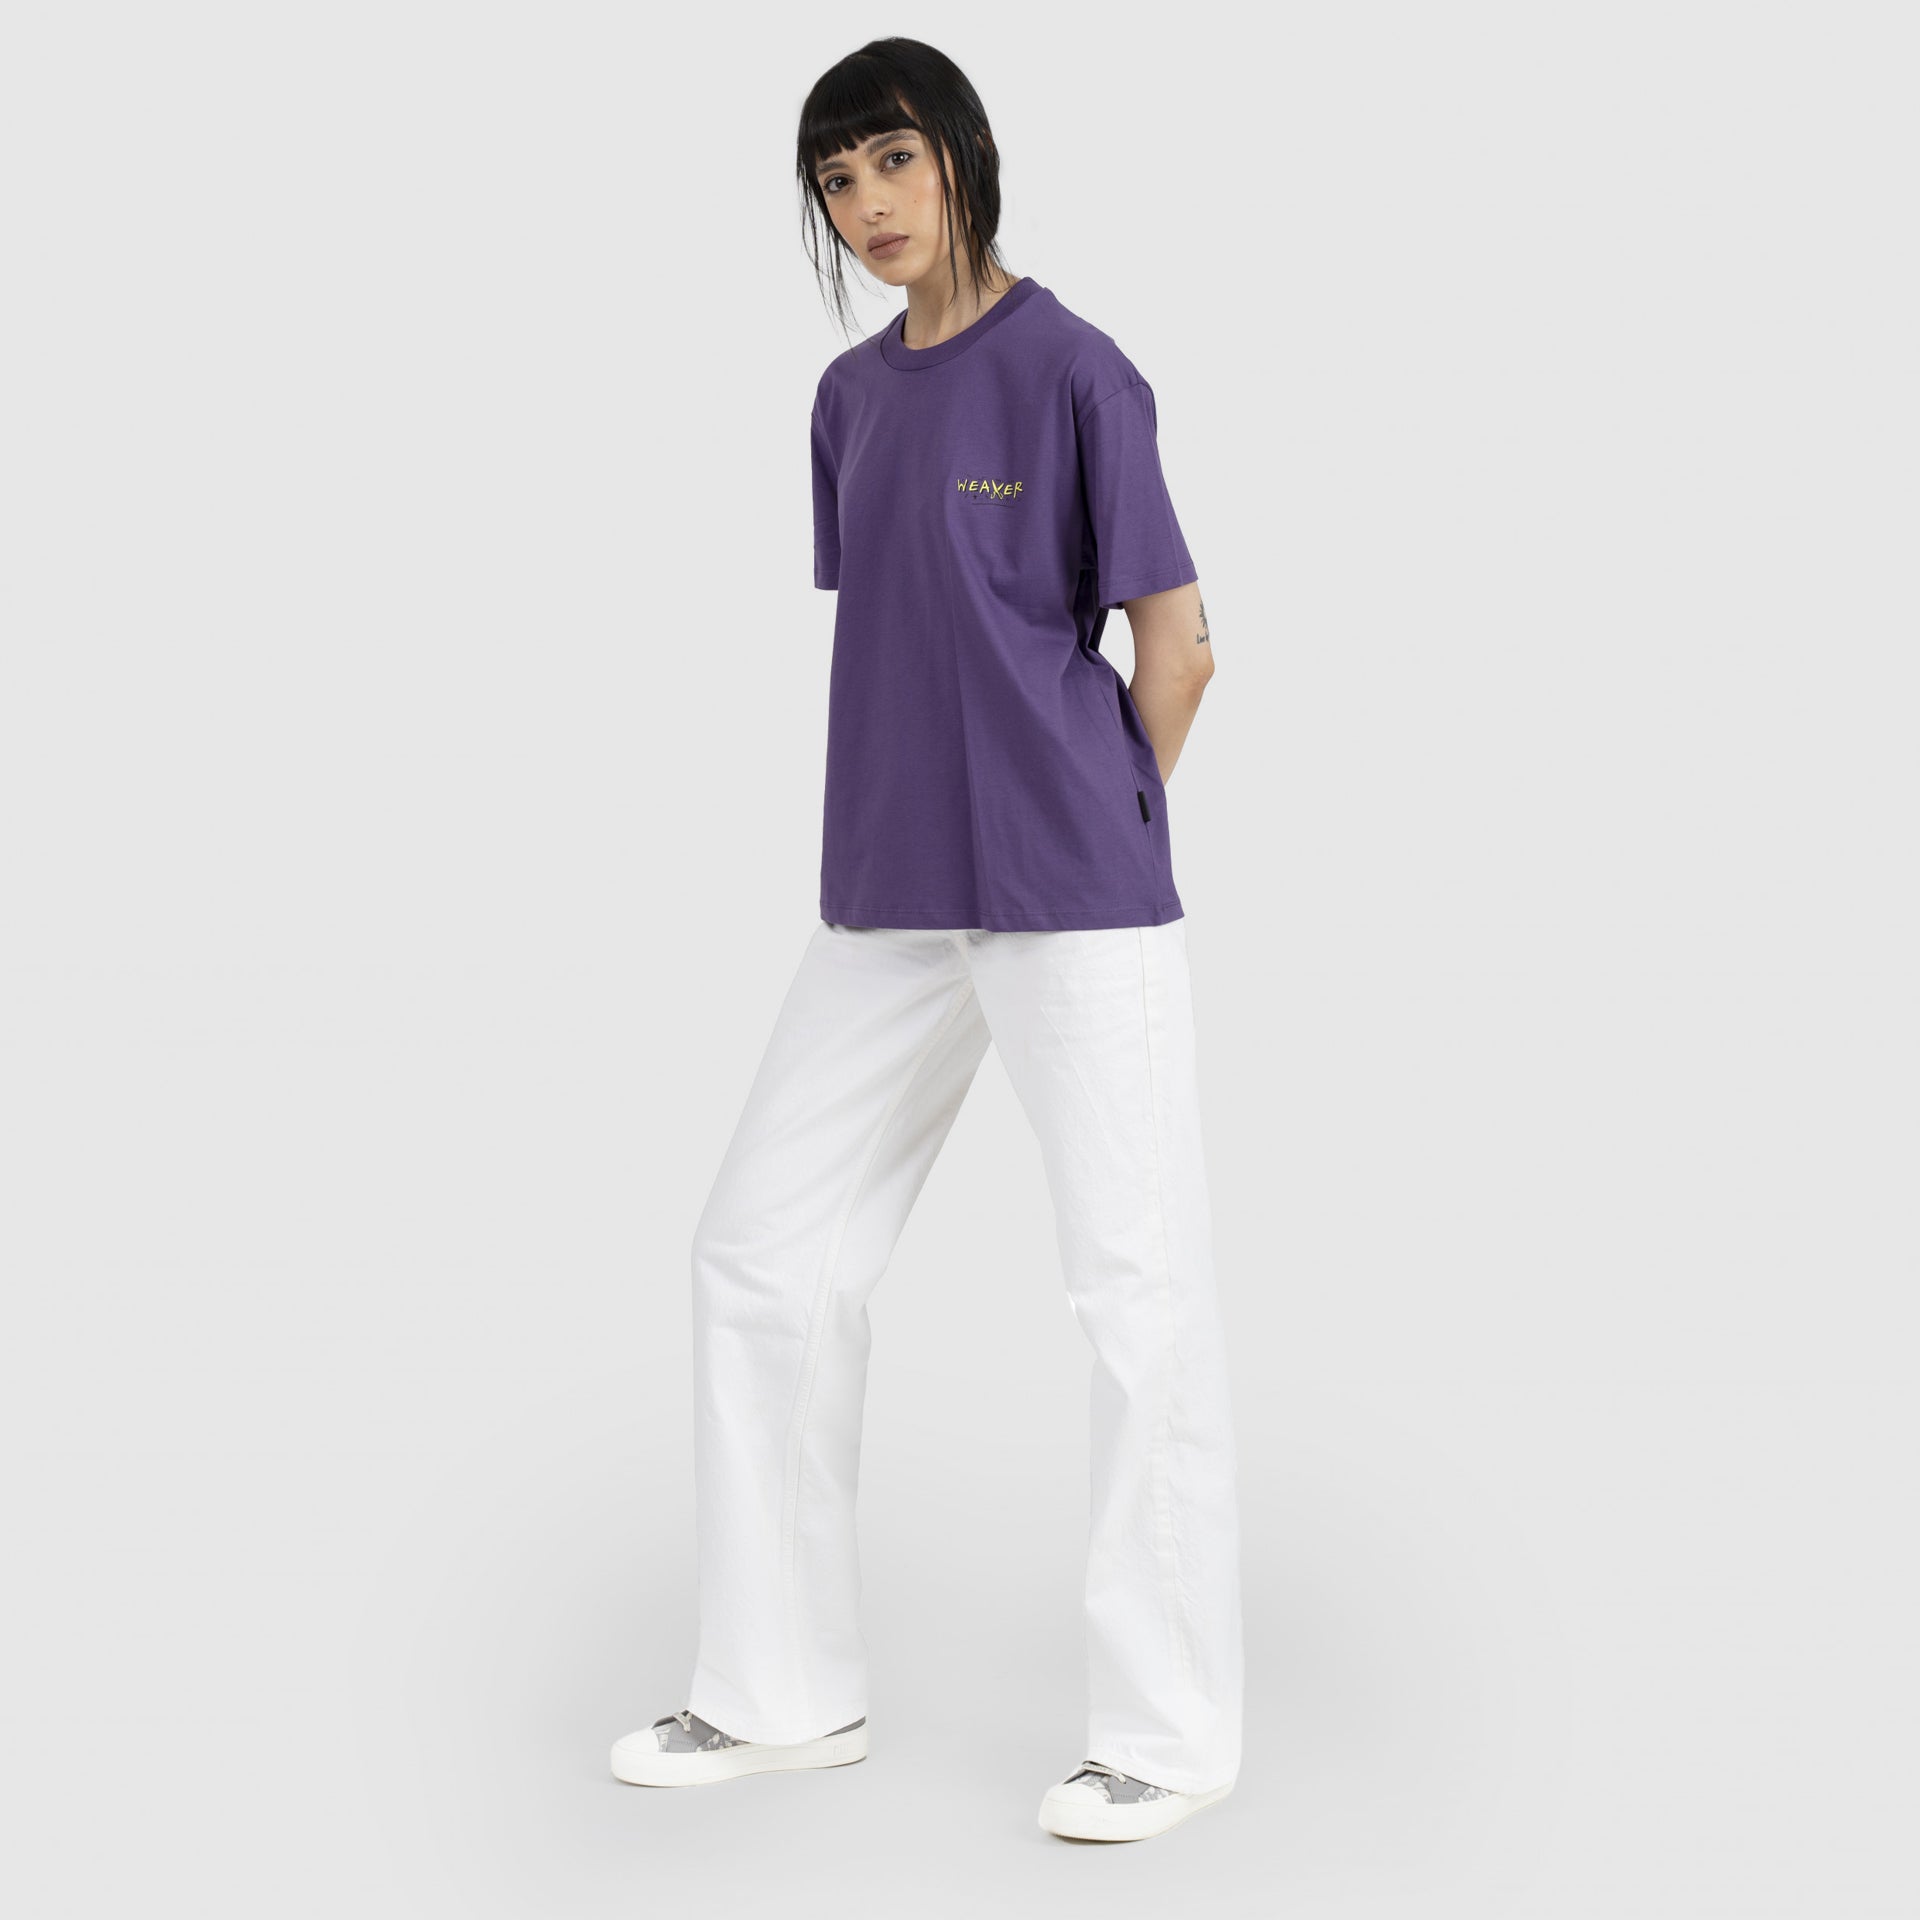 Purple Classic T-Shirt From Weaver Design